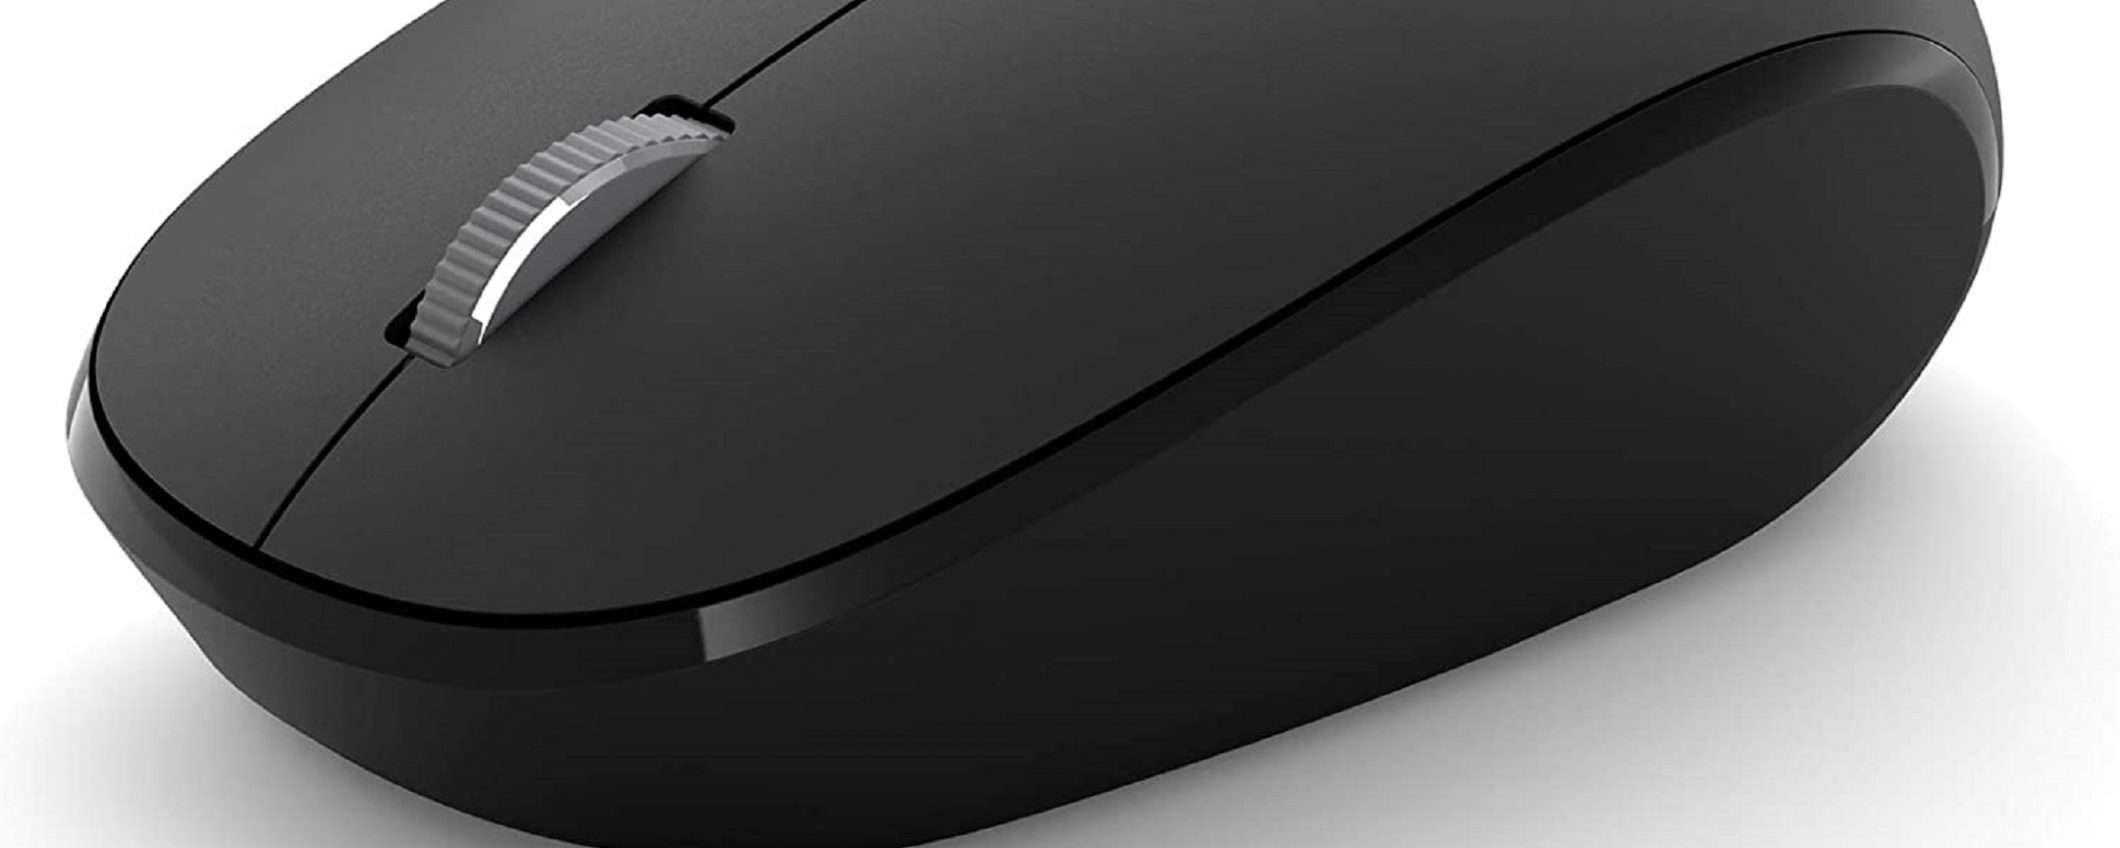 Microsoft Bluetooth Mouse a soli 12,99€ su Amazon